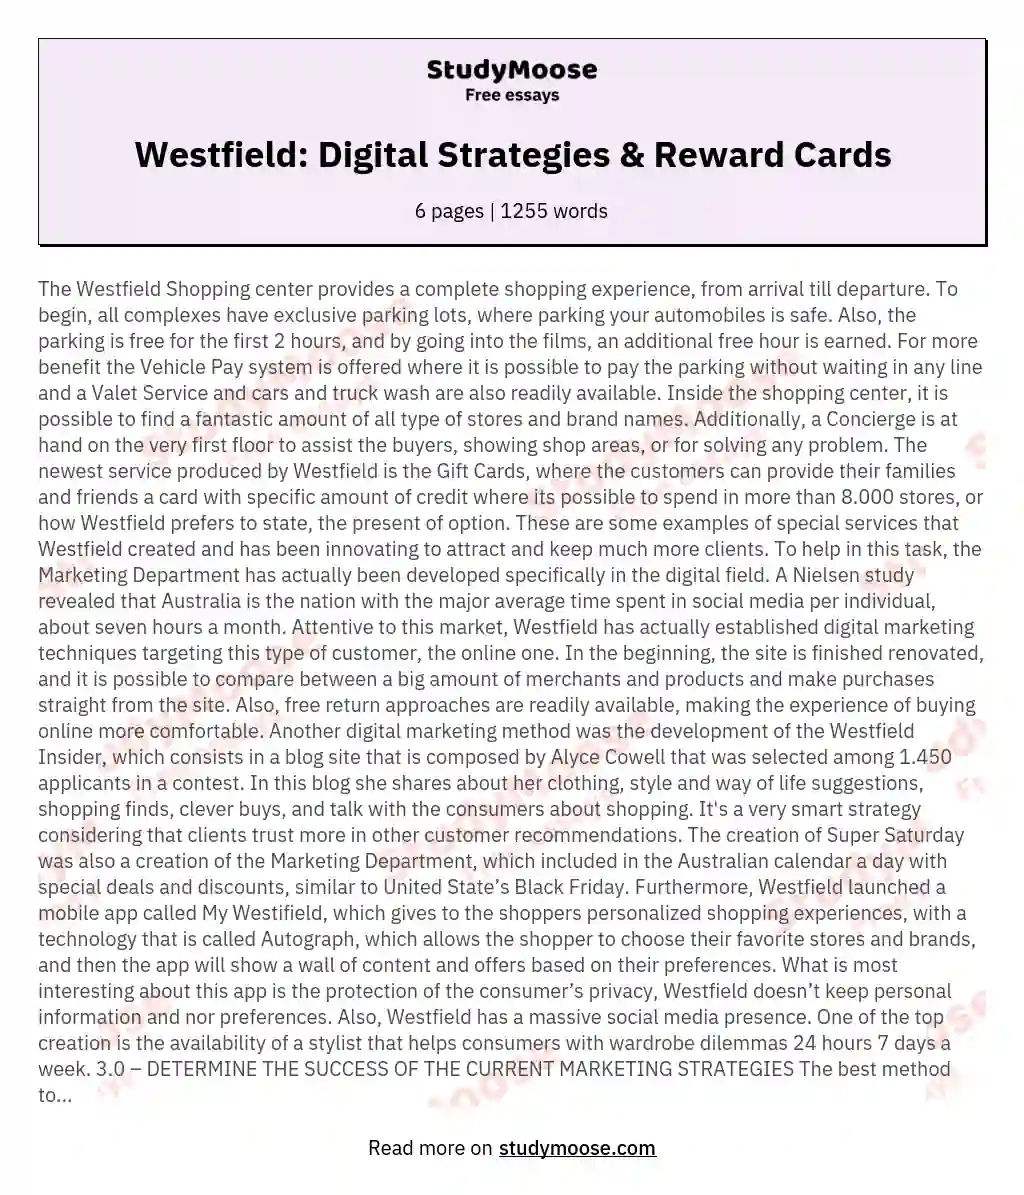 Westfield: Digital Strategies & Reward Cards essay